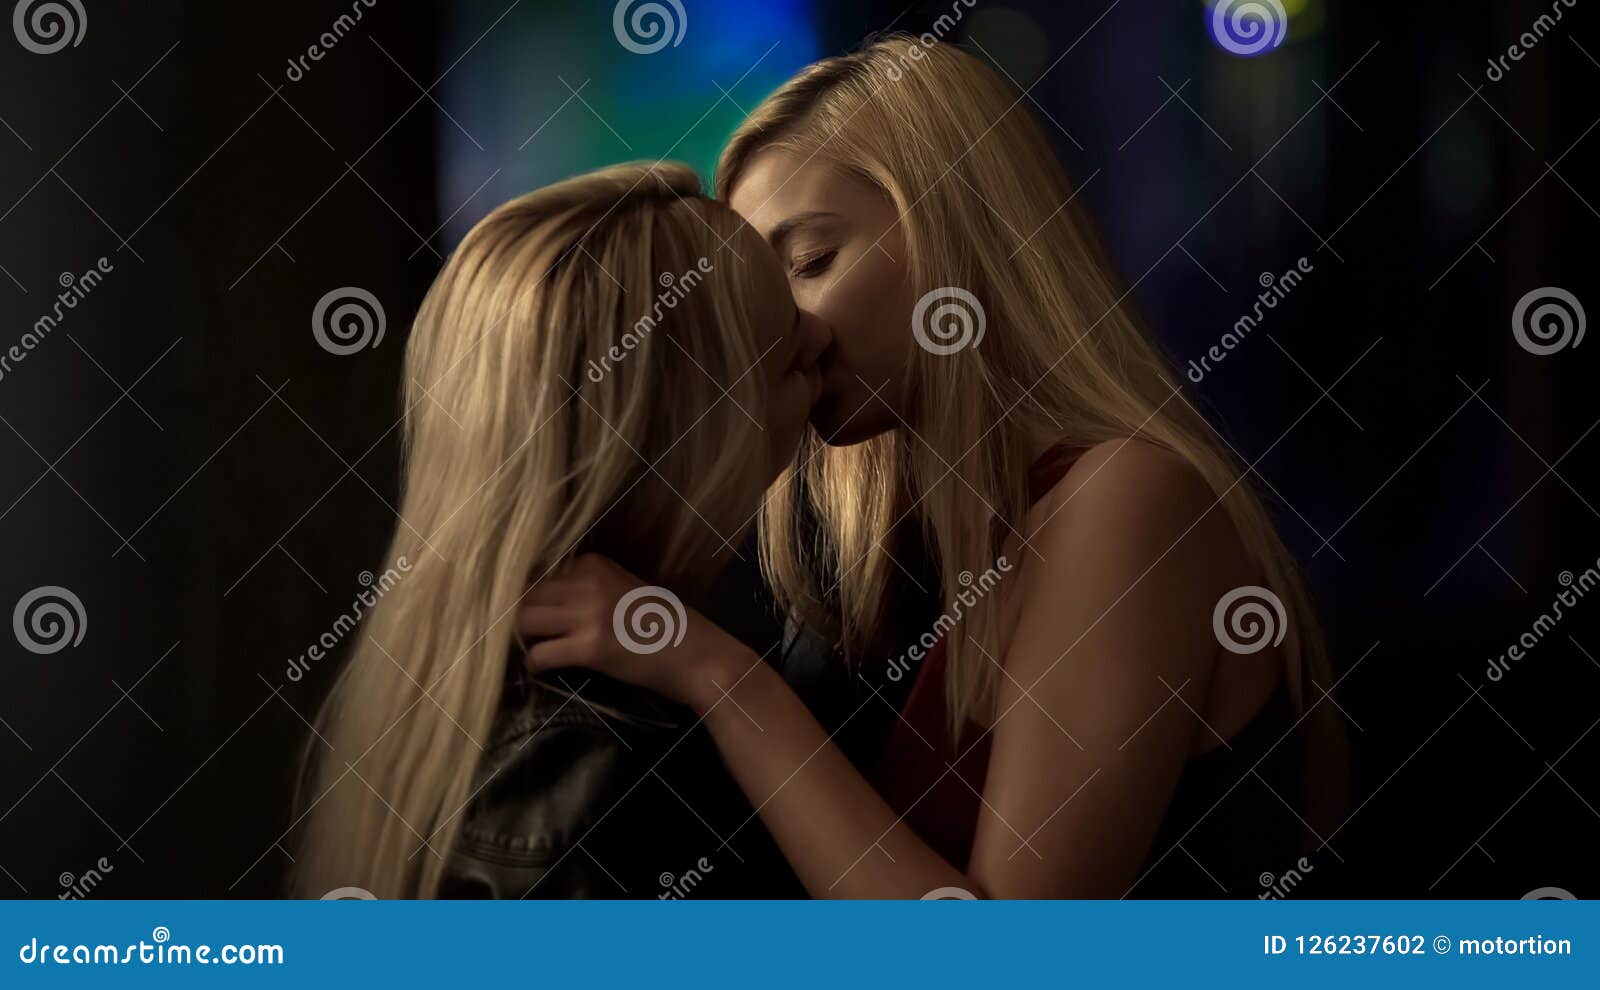 amanda bernardo recommends blonde lesbians making out pic